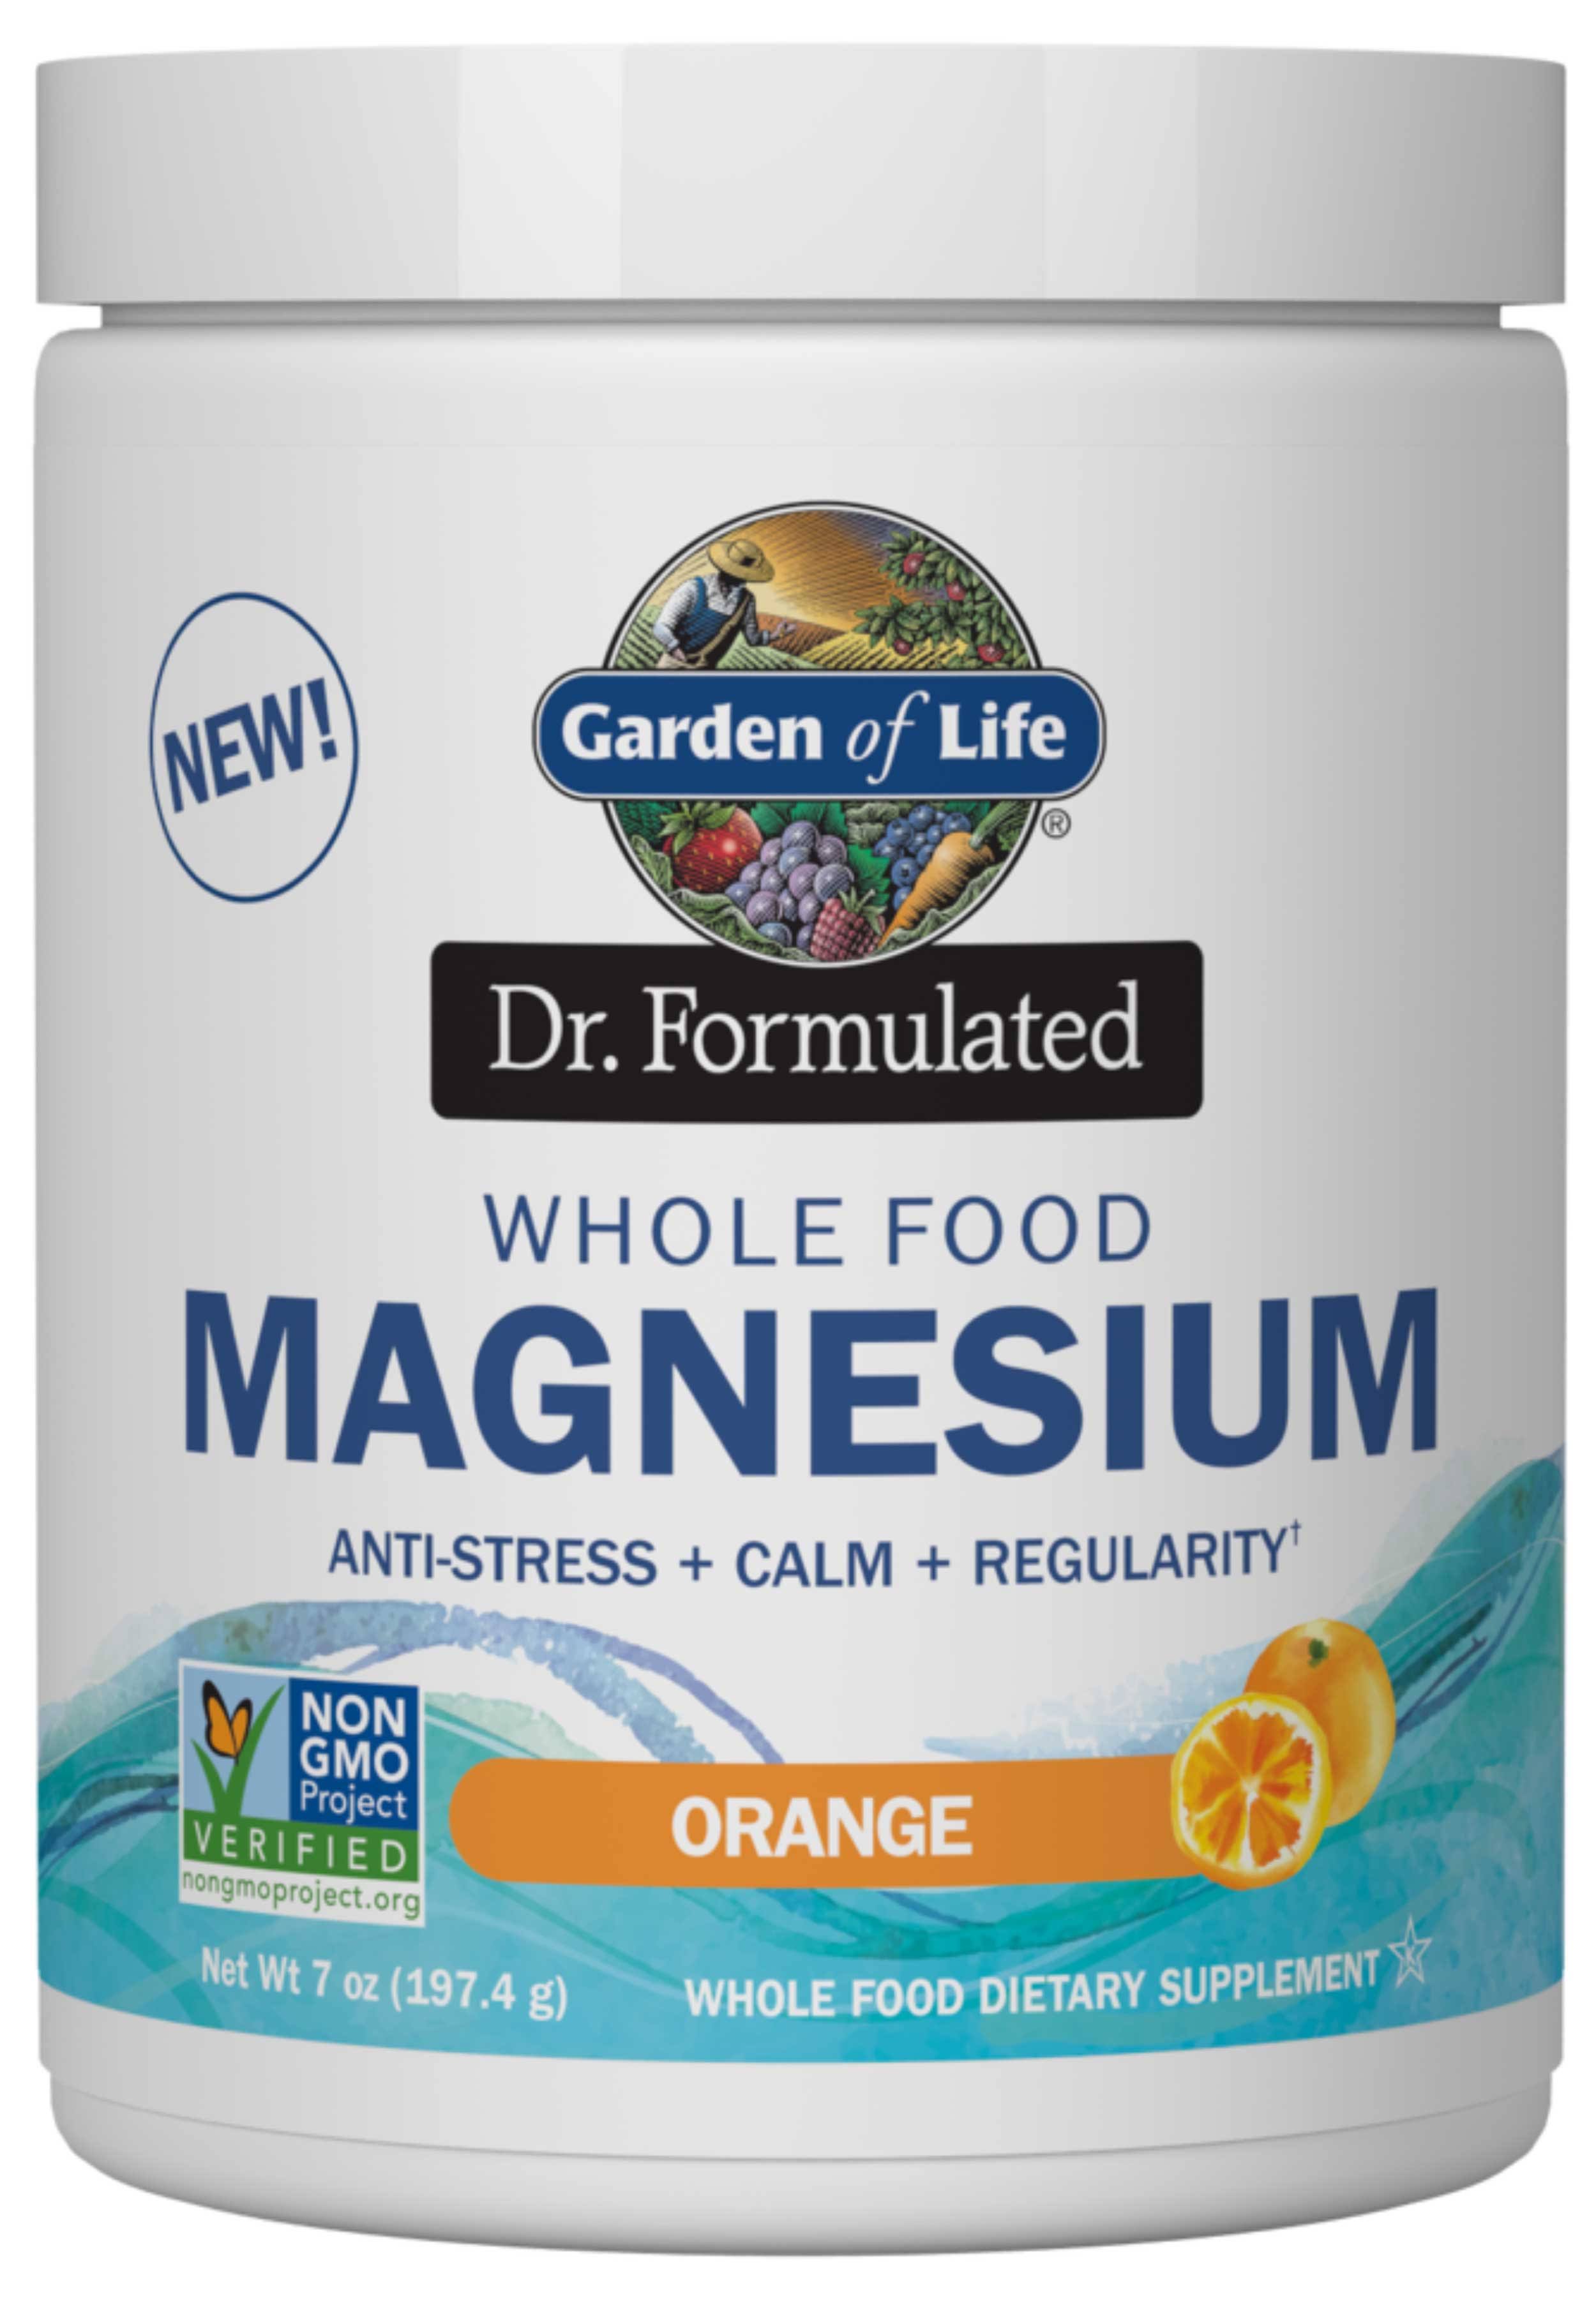 Garden of Life - Dr. Formulated Whole Food Magnesium, Orange - 197g